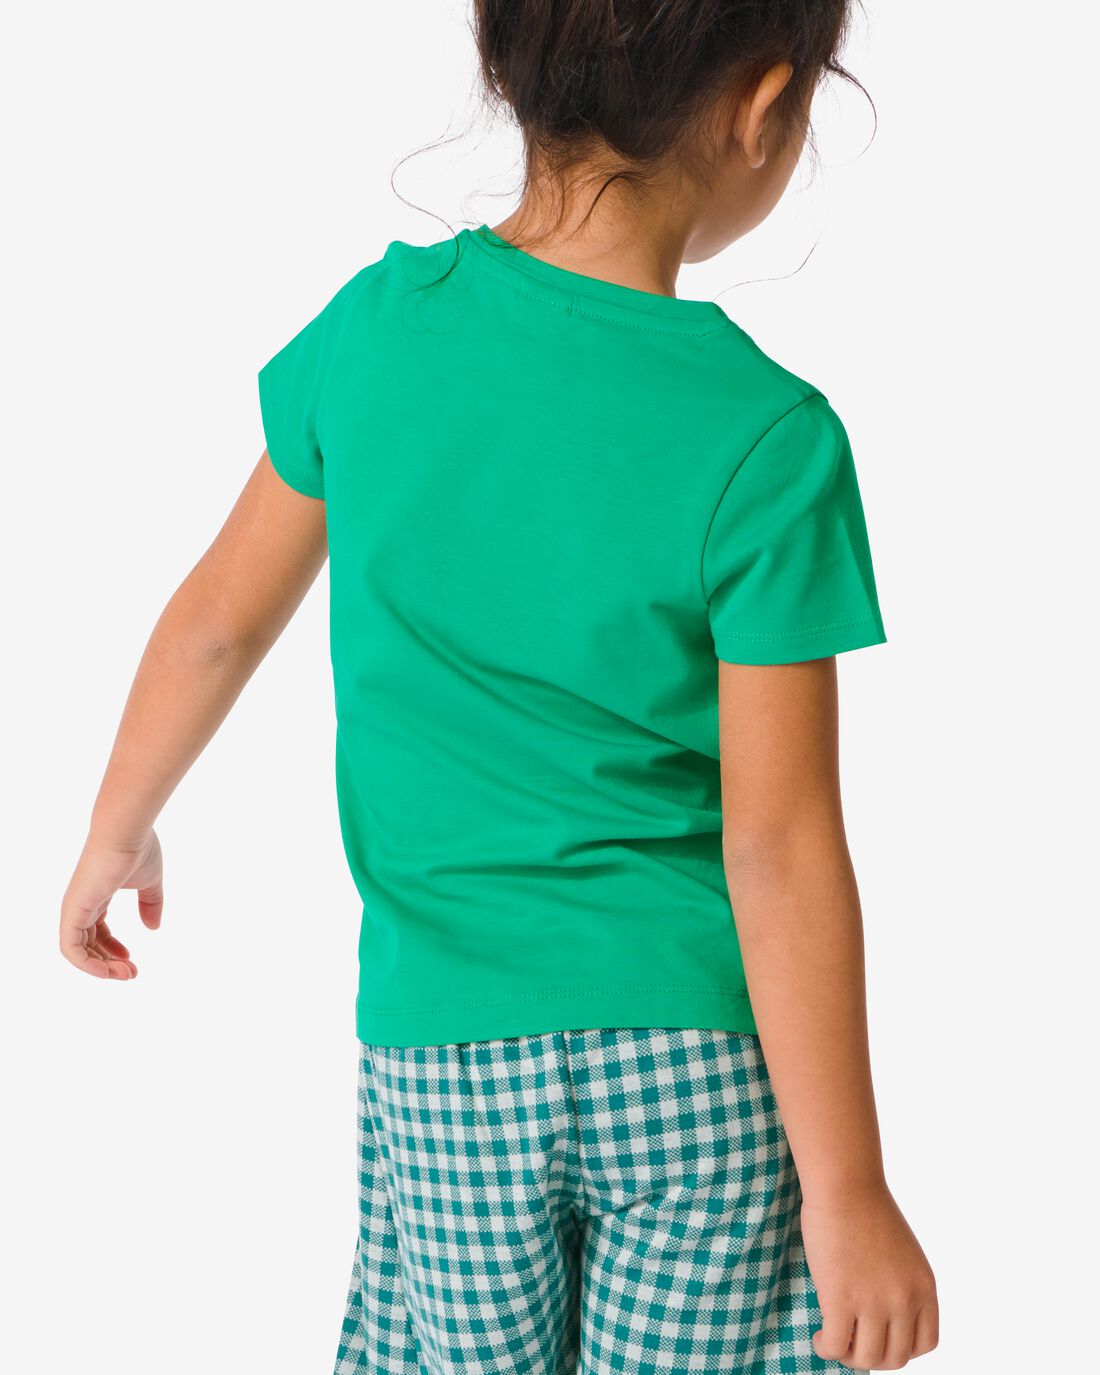 HEMA Kinder T-shirt Biologisch Katoen Groen (groen)